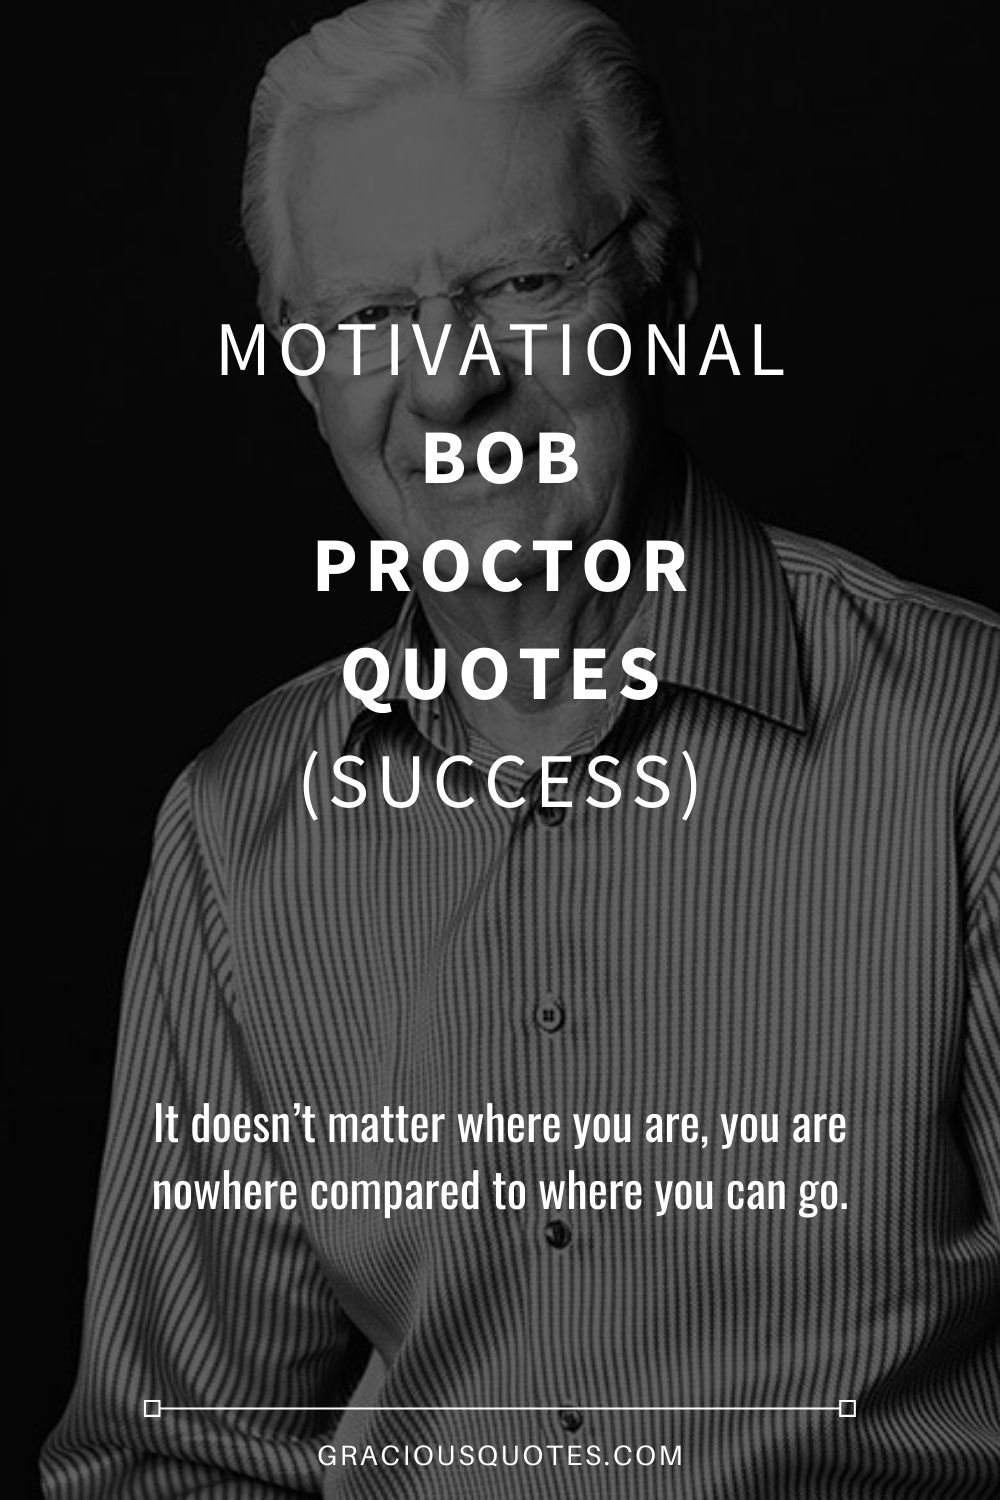 Motivational Bob Proctor Quotes (SUCCESS) - Gracious Quotes